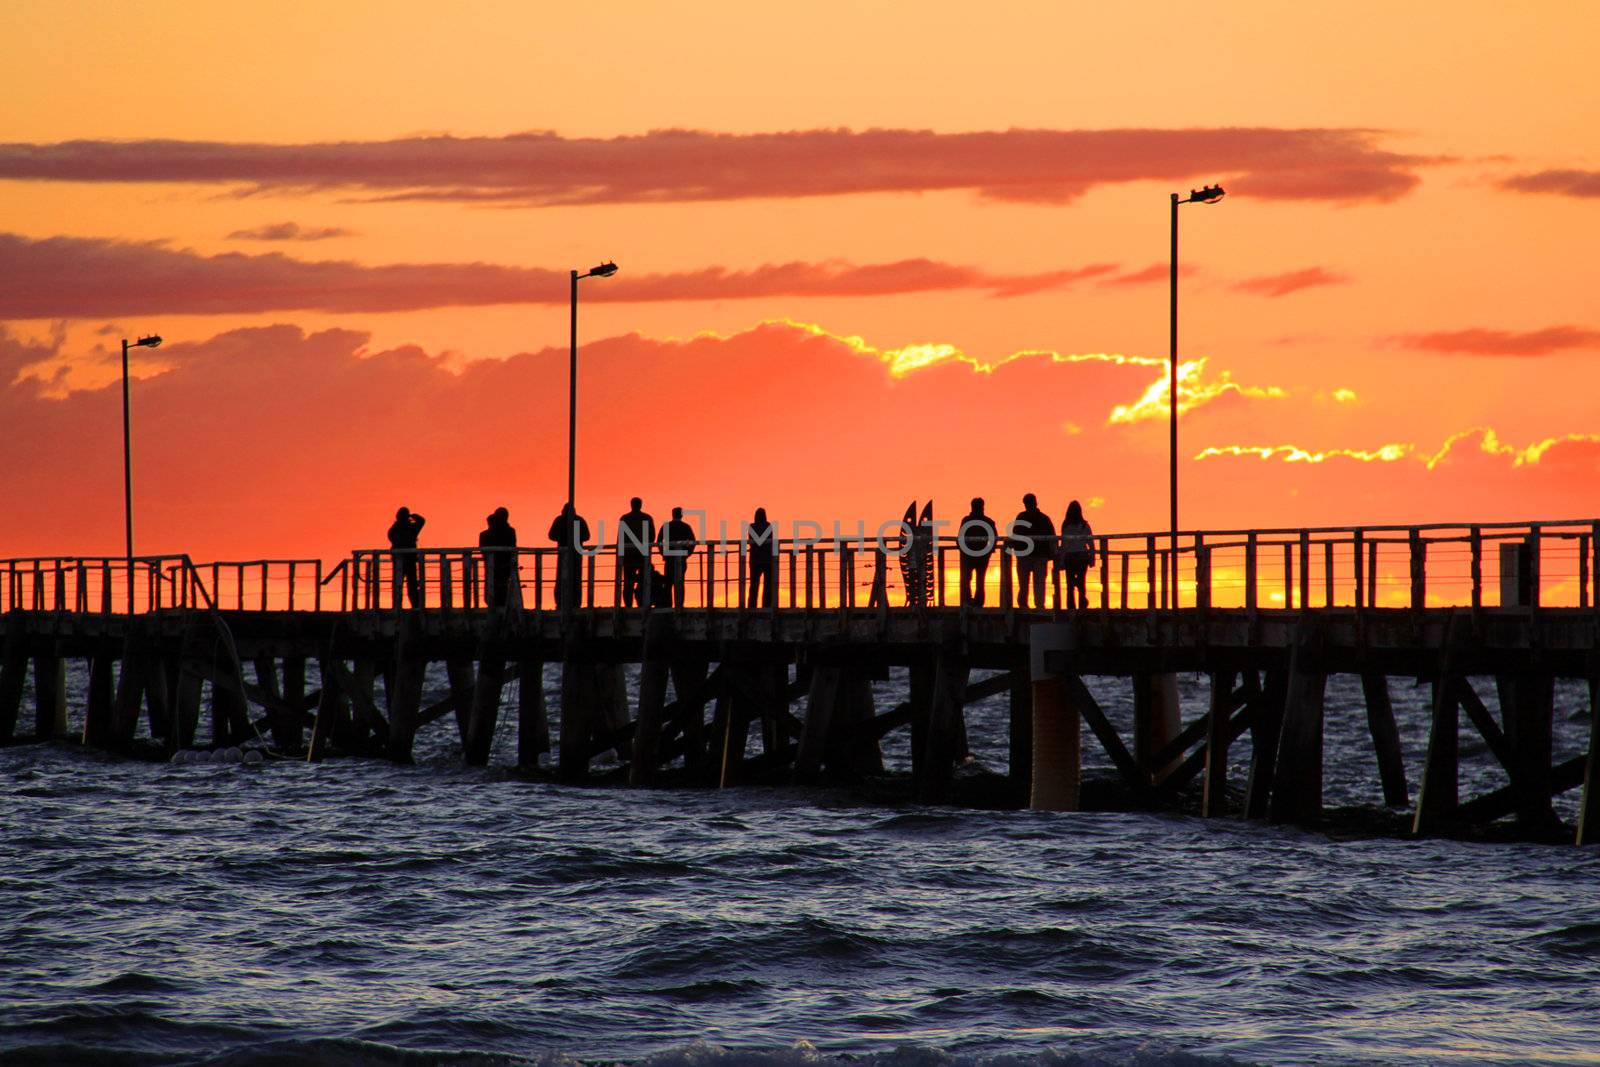 People on Jetty watching Sunset.  Semaphore Beach, Adelaide, Australia.